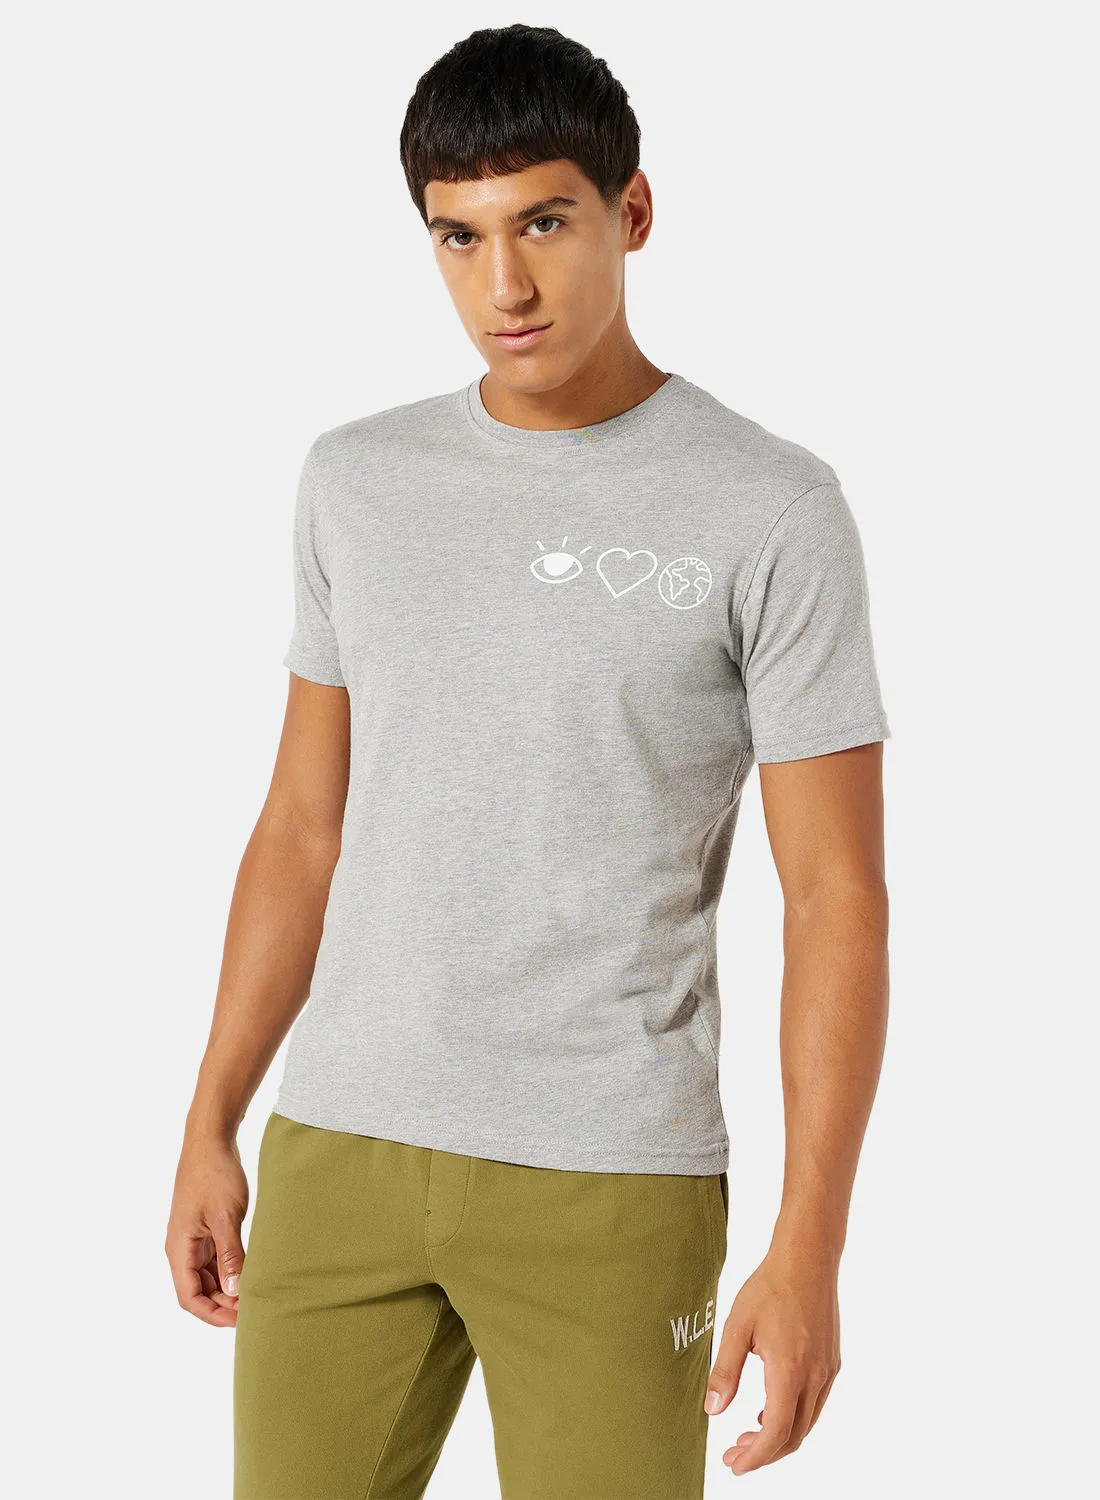 Sivvi x D'Atelier Eco-Friendly Logo Crew T-Shirt Light Grey